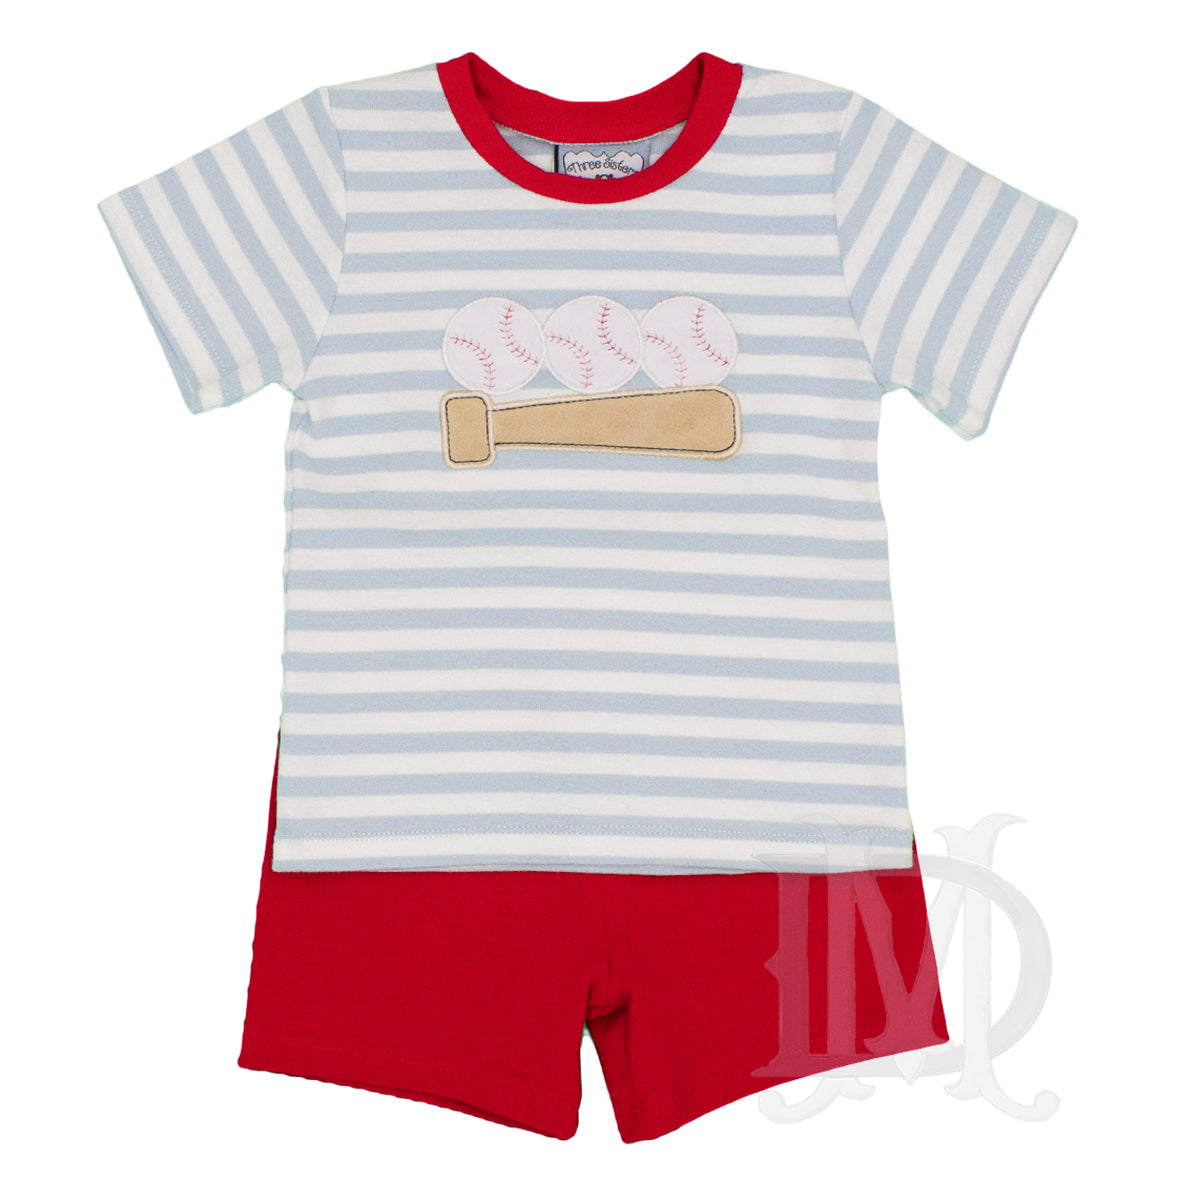 Toddler Boy's Appliqued Baseball Knit Shorts Set